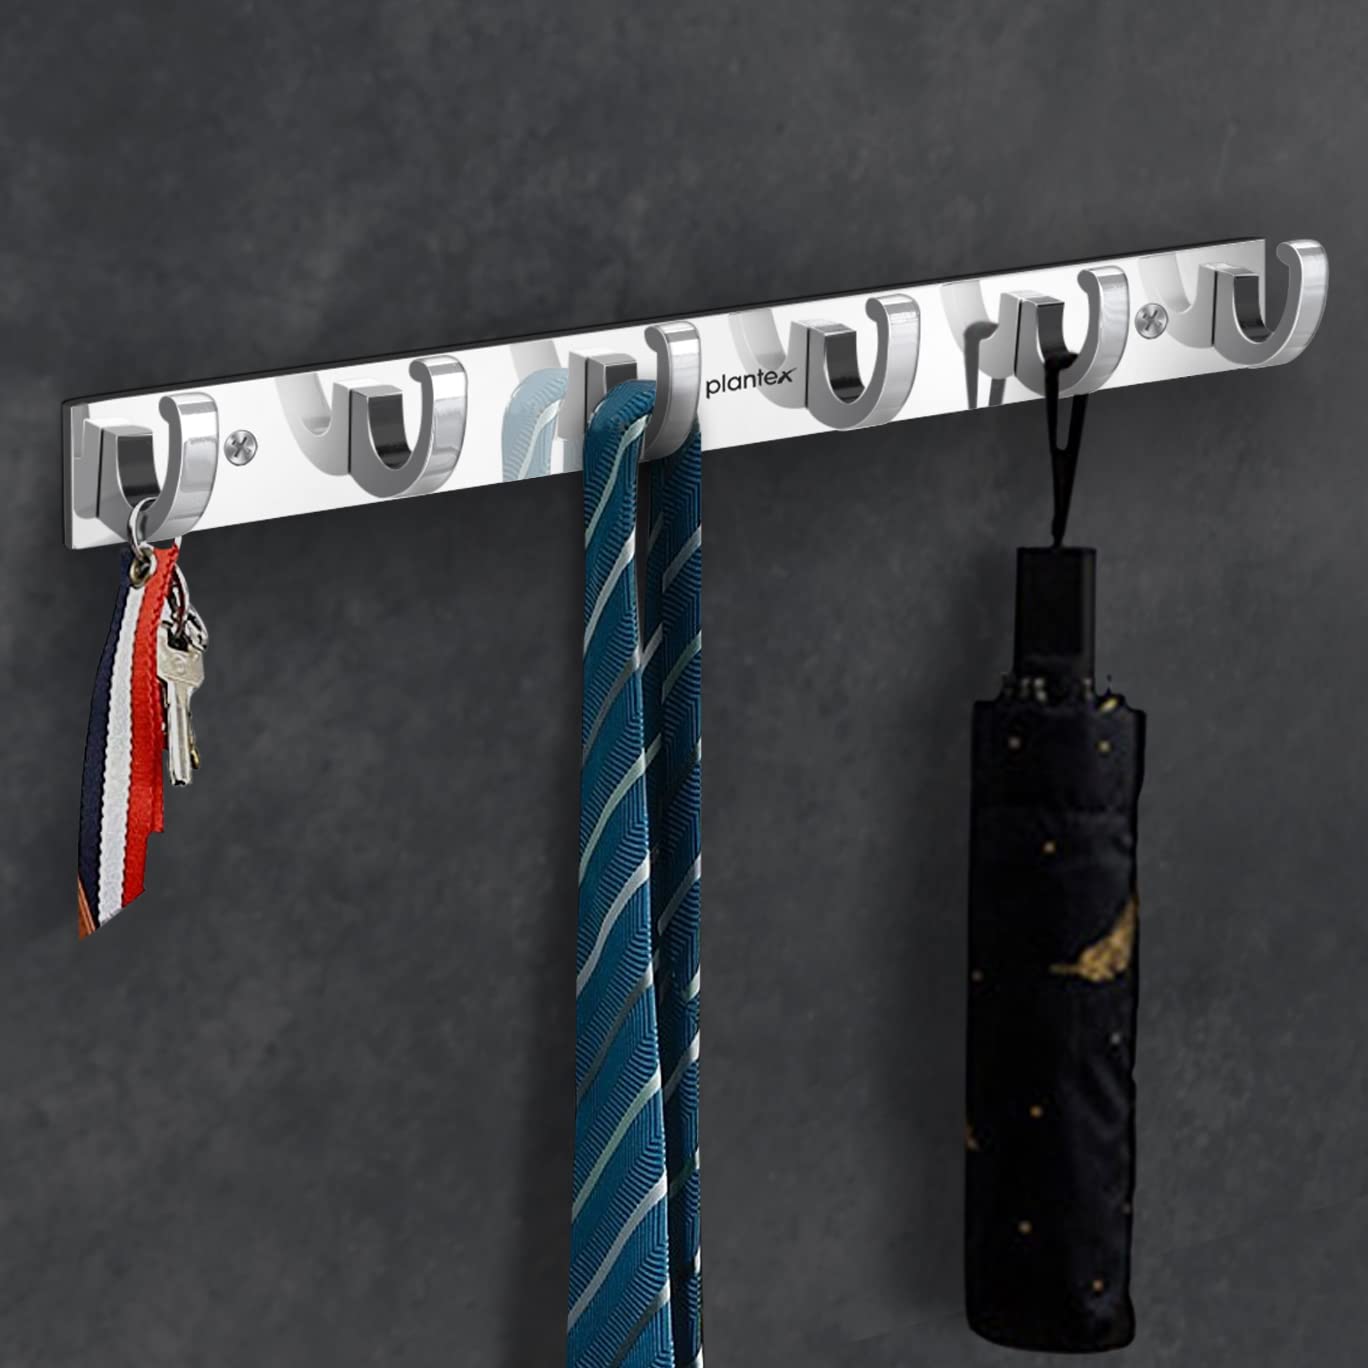 Plantex Aluminum Hook Rail with 6 Hooks for Walls of Bathroom/Kitchen–Hook Rail Bar for Clothes/Towel/Keys-Pack of 2 (6 Hooks,Chrome)